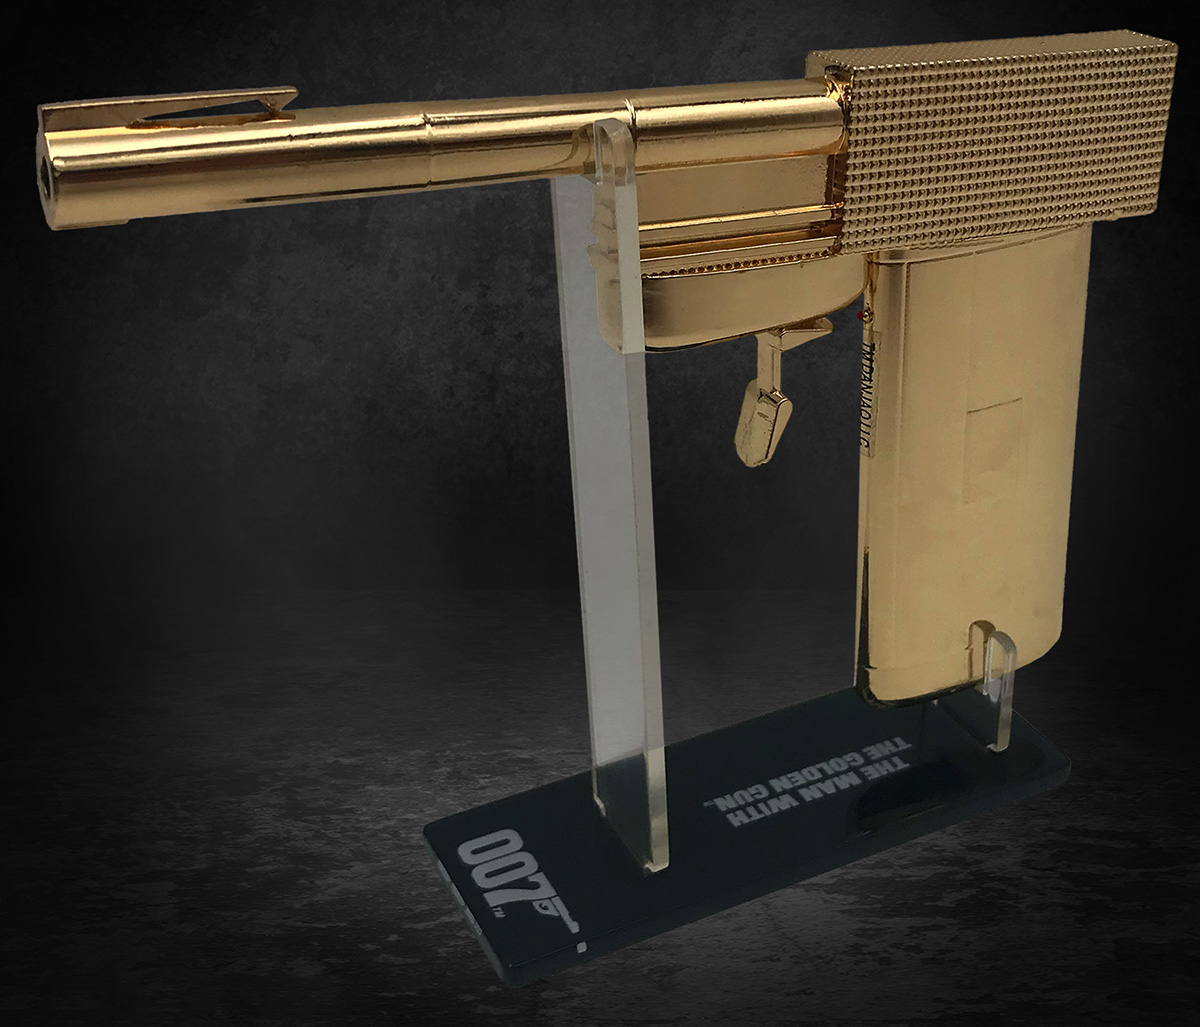 James Bond Golden Gun Prop Replica by Factory Entertainment metal standee